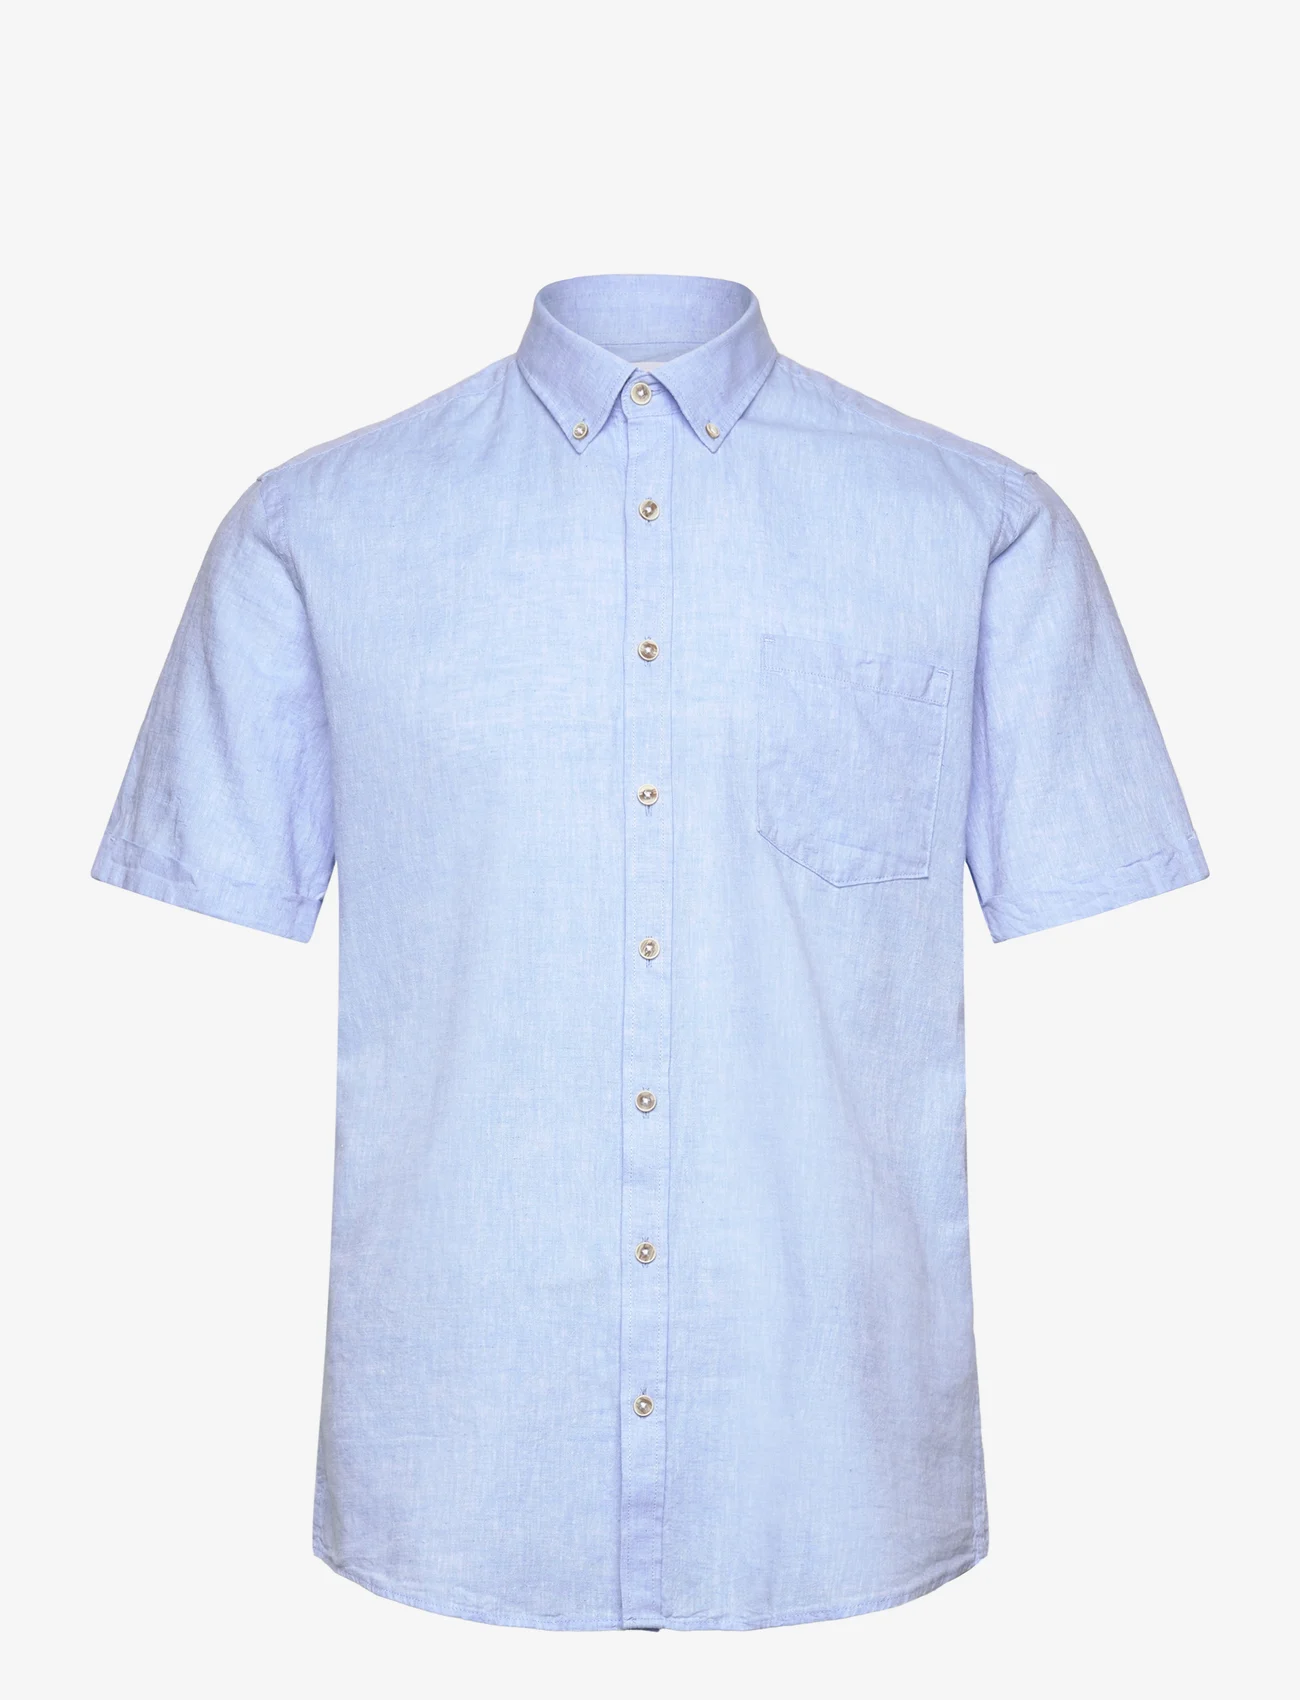 Lindbergh - Cotton/linen shirt S/S - hørskjorter - sky blue - 0